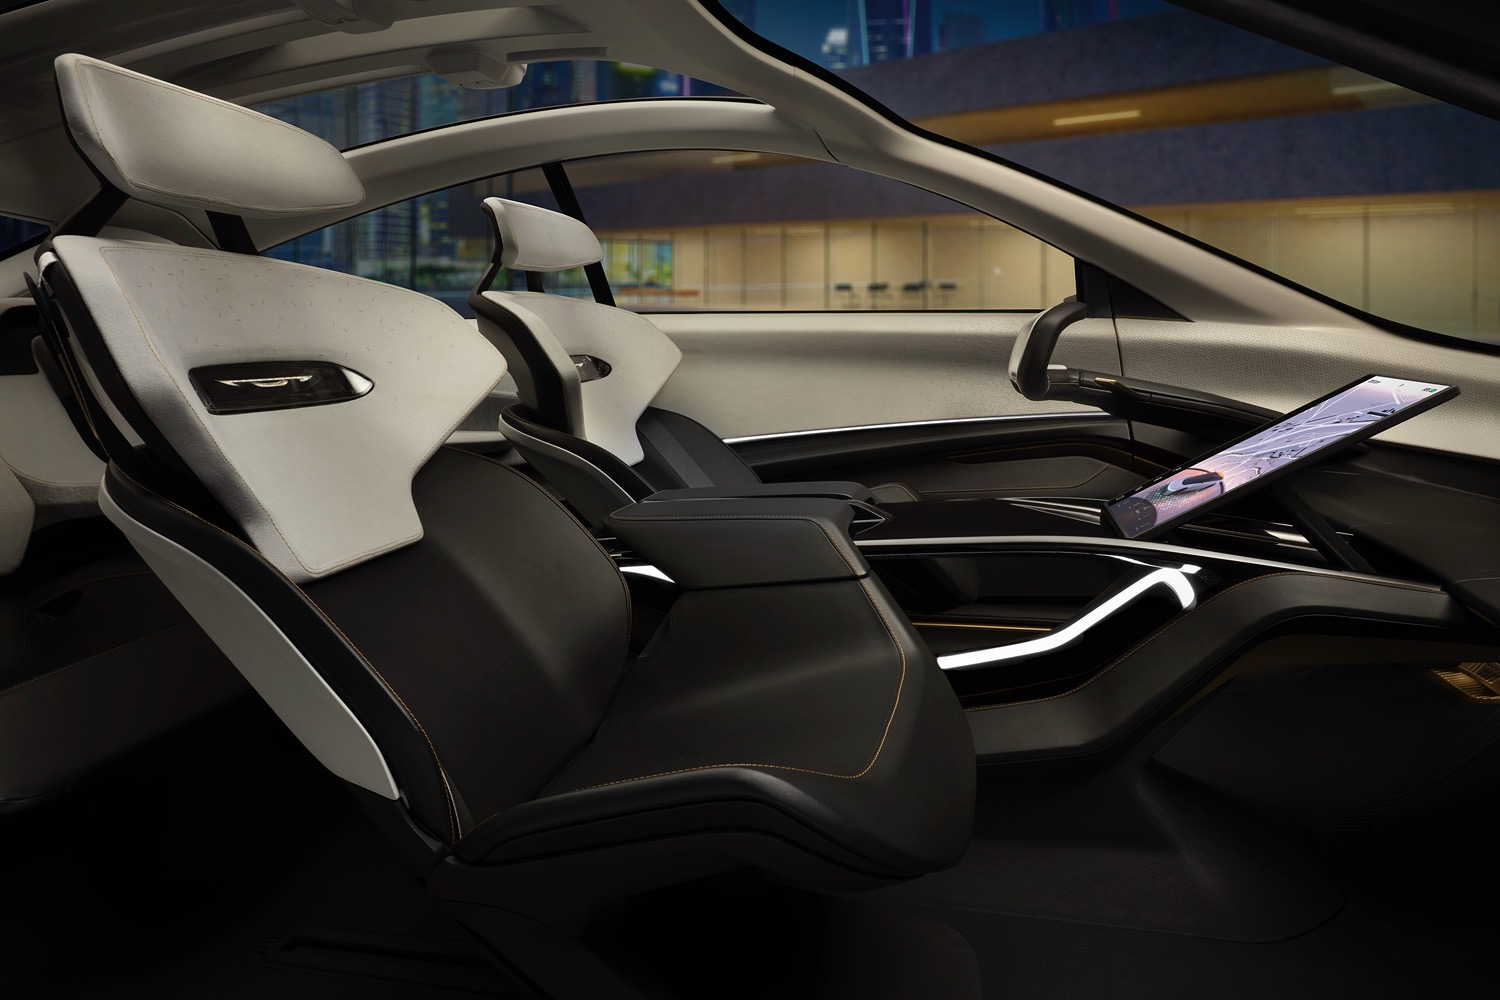 Interior of the Chrysler Halcyon concept.